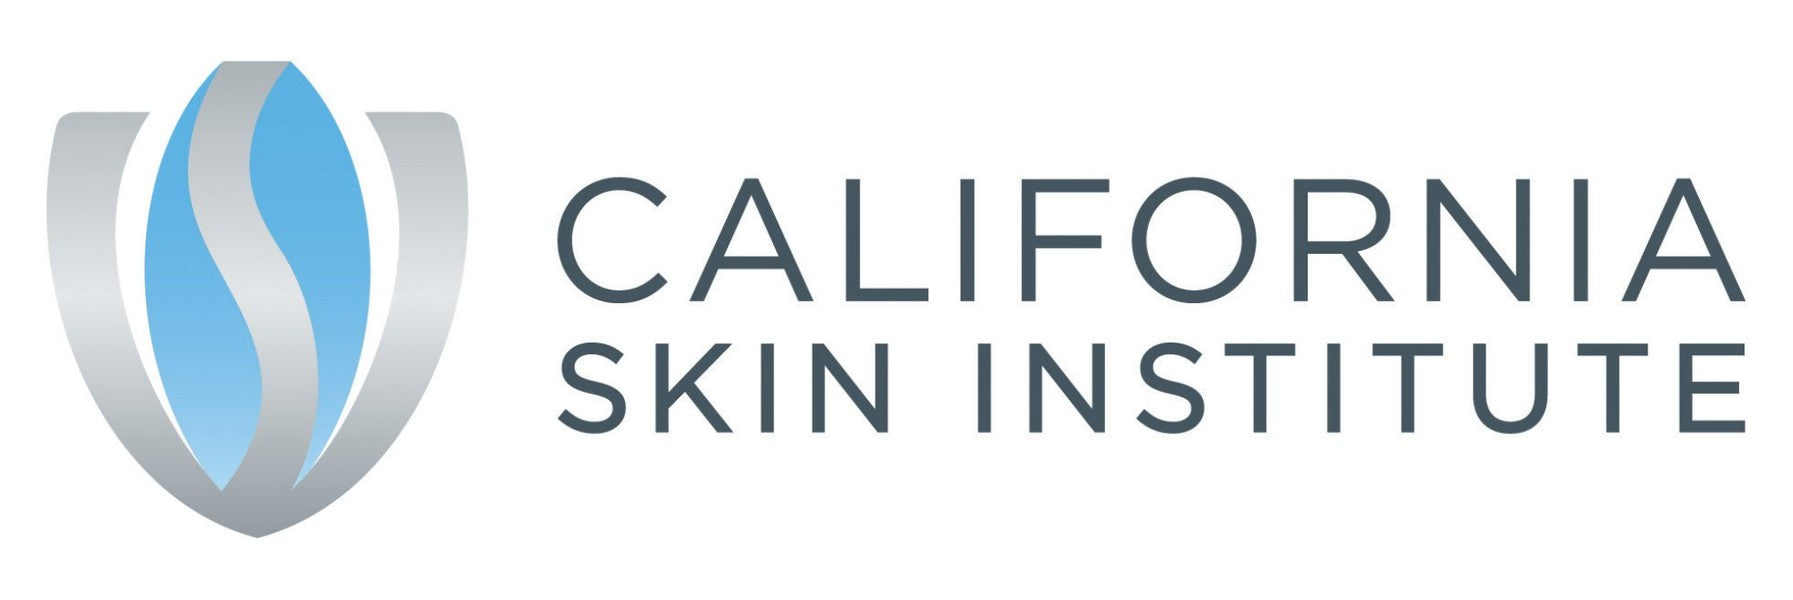 California Skin Institute: Dermatology and Skin Care Services